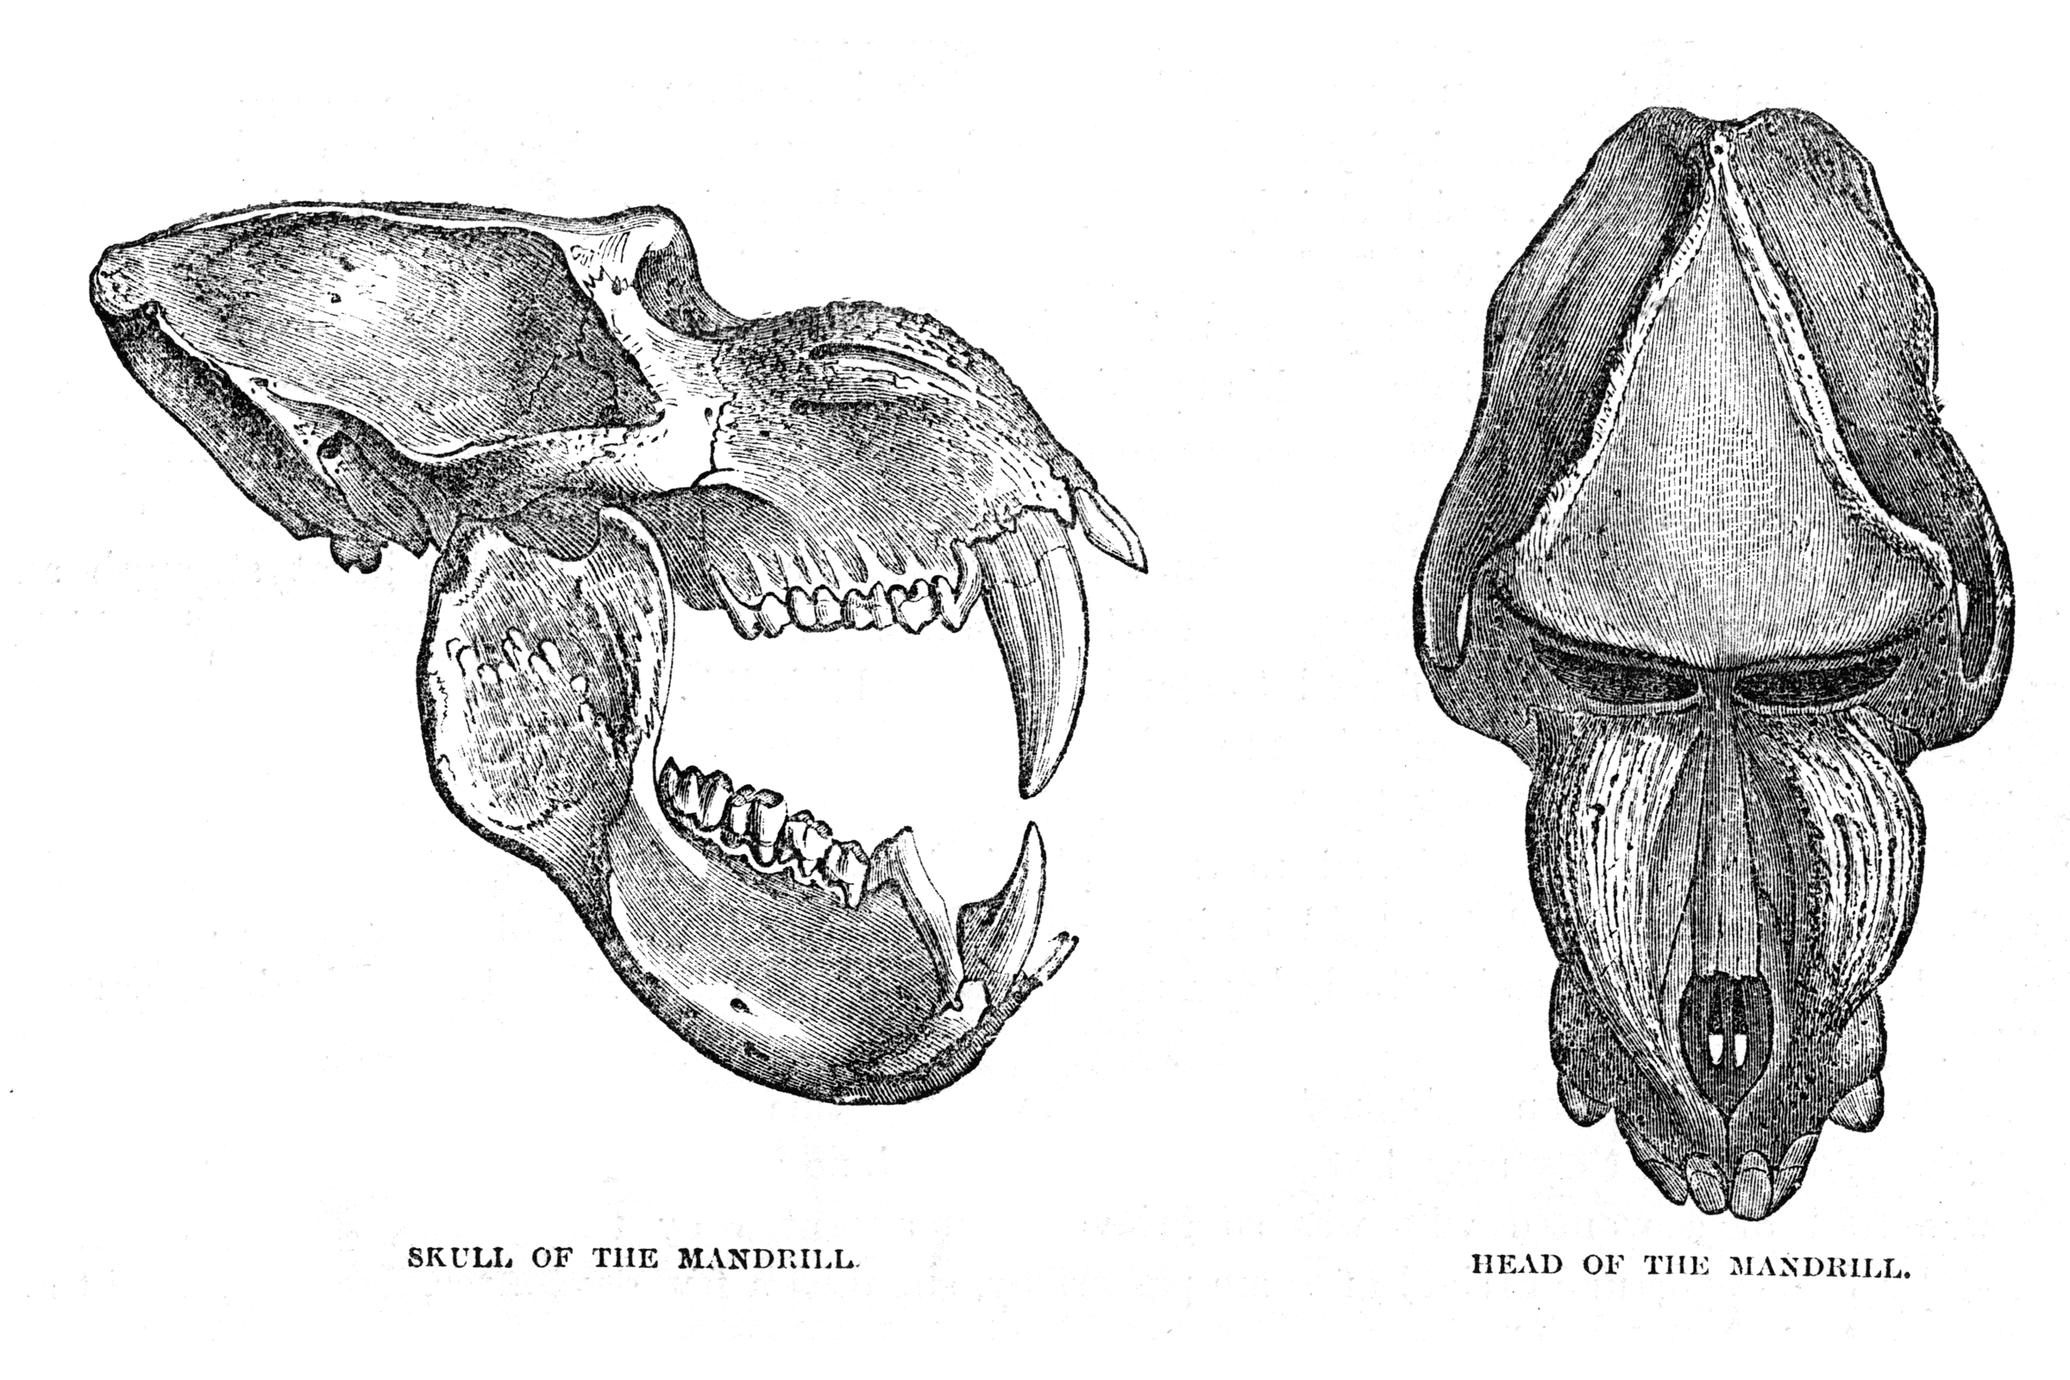 Skull of the Mandrill and Head of the Mandrill